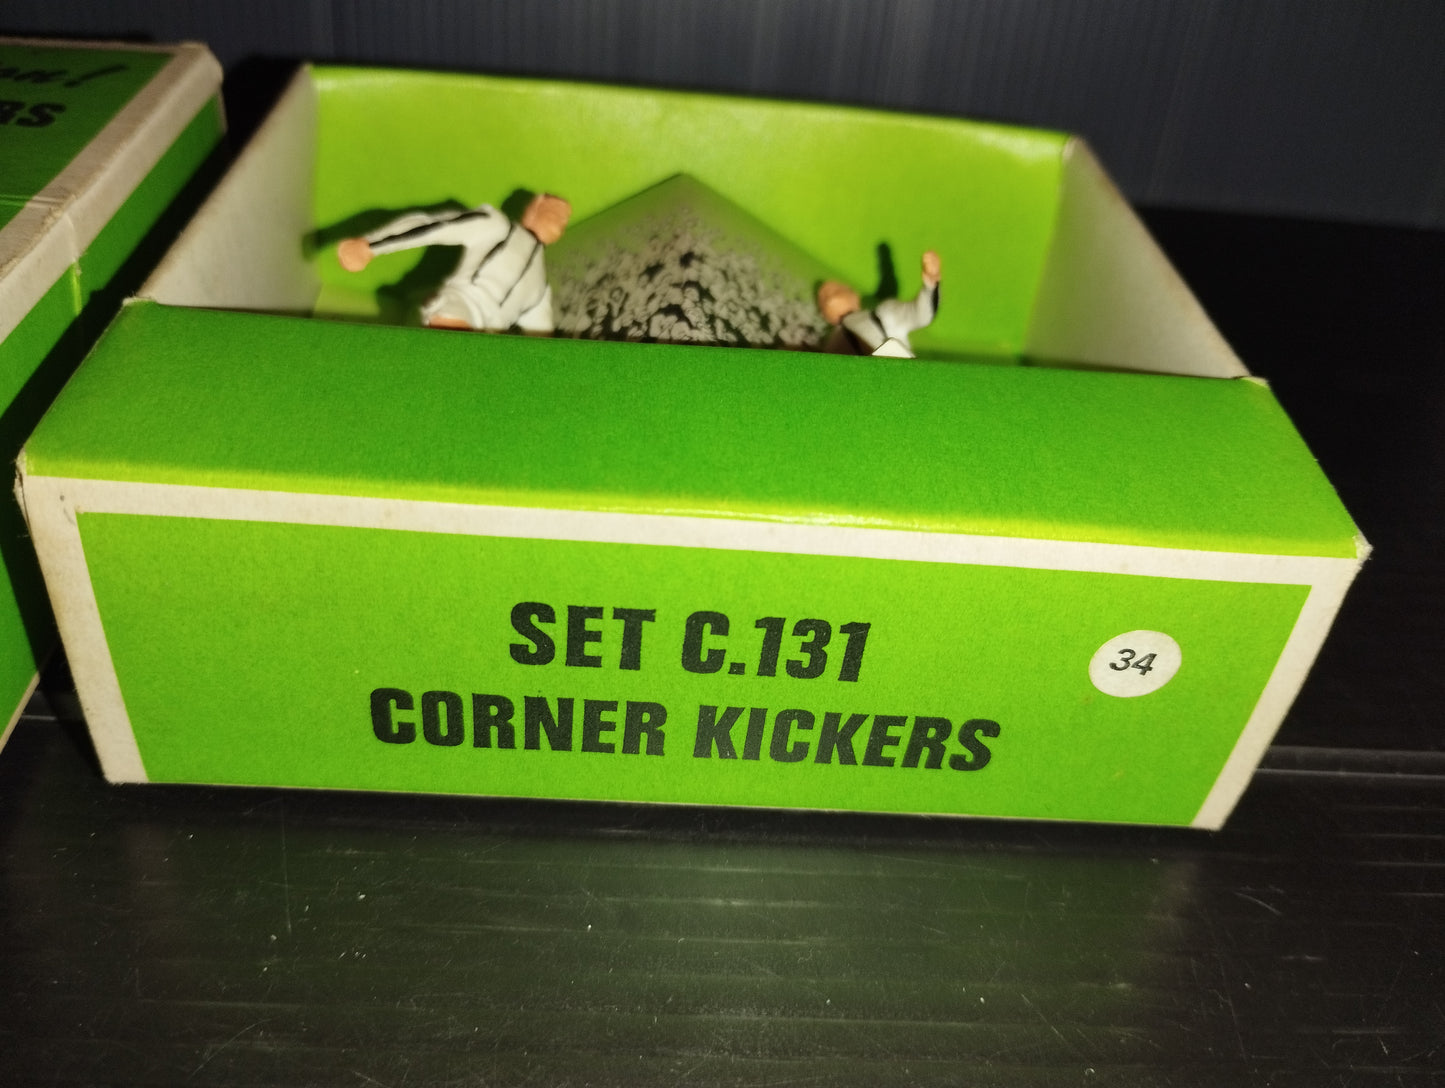 Subbuteo Corner Kickers Juventus

Anni 70